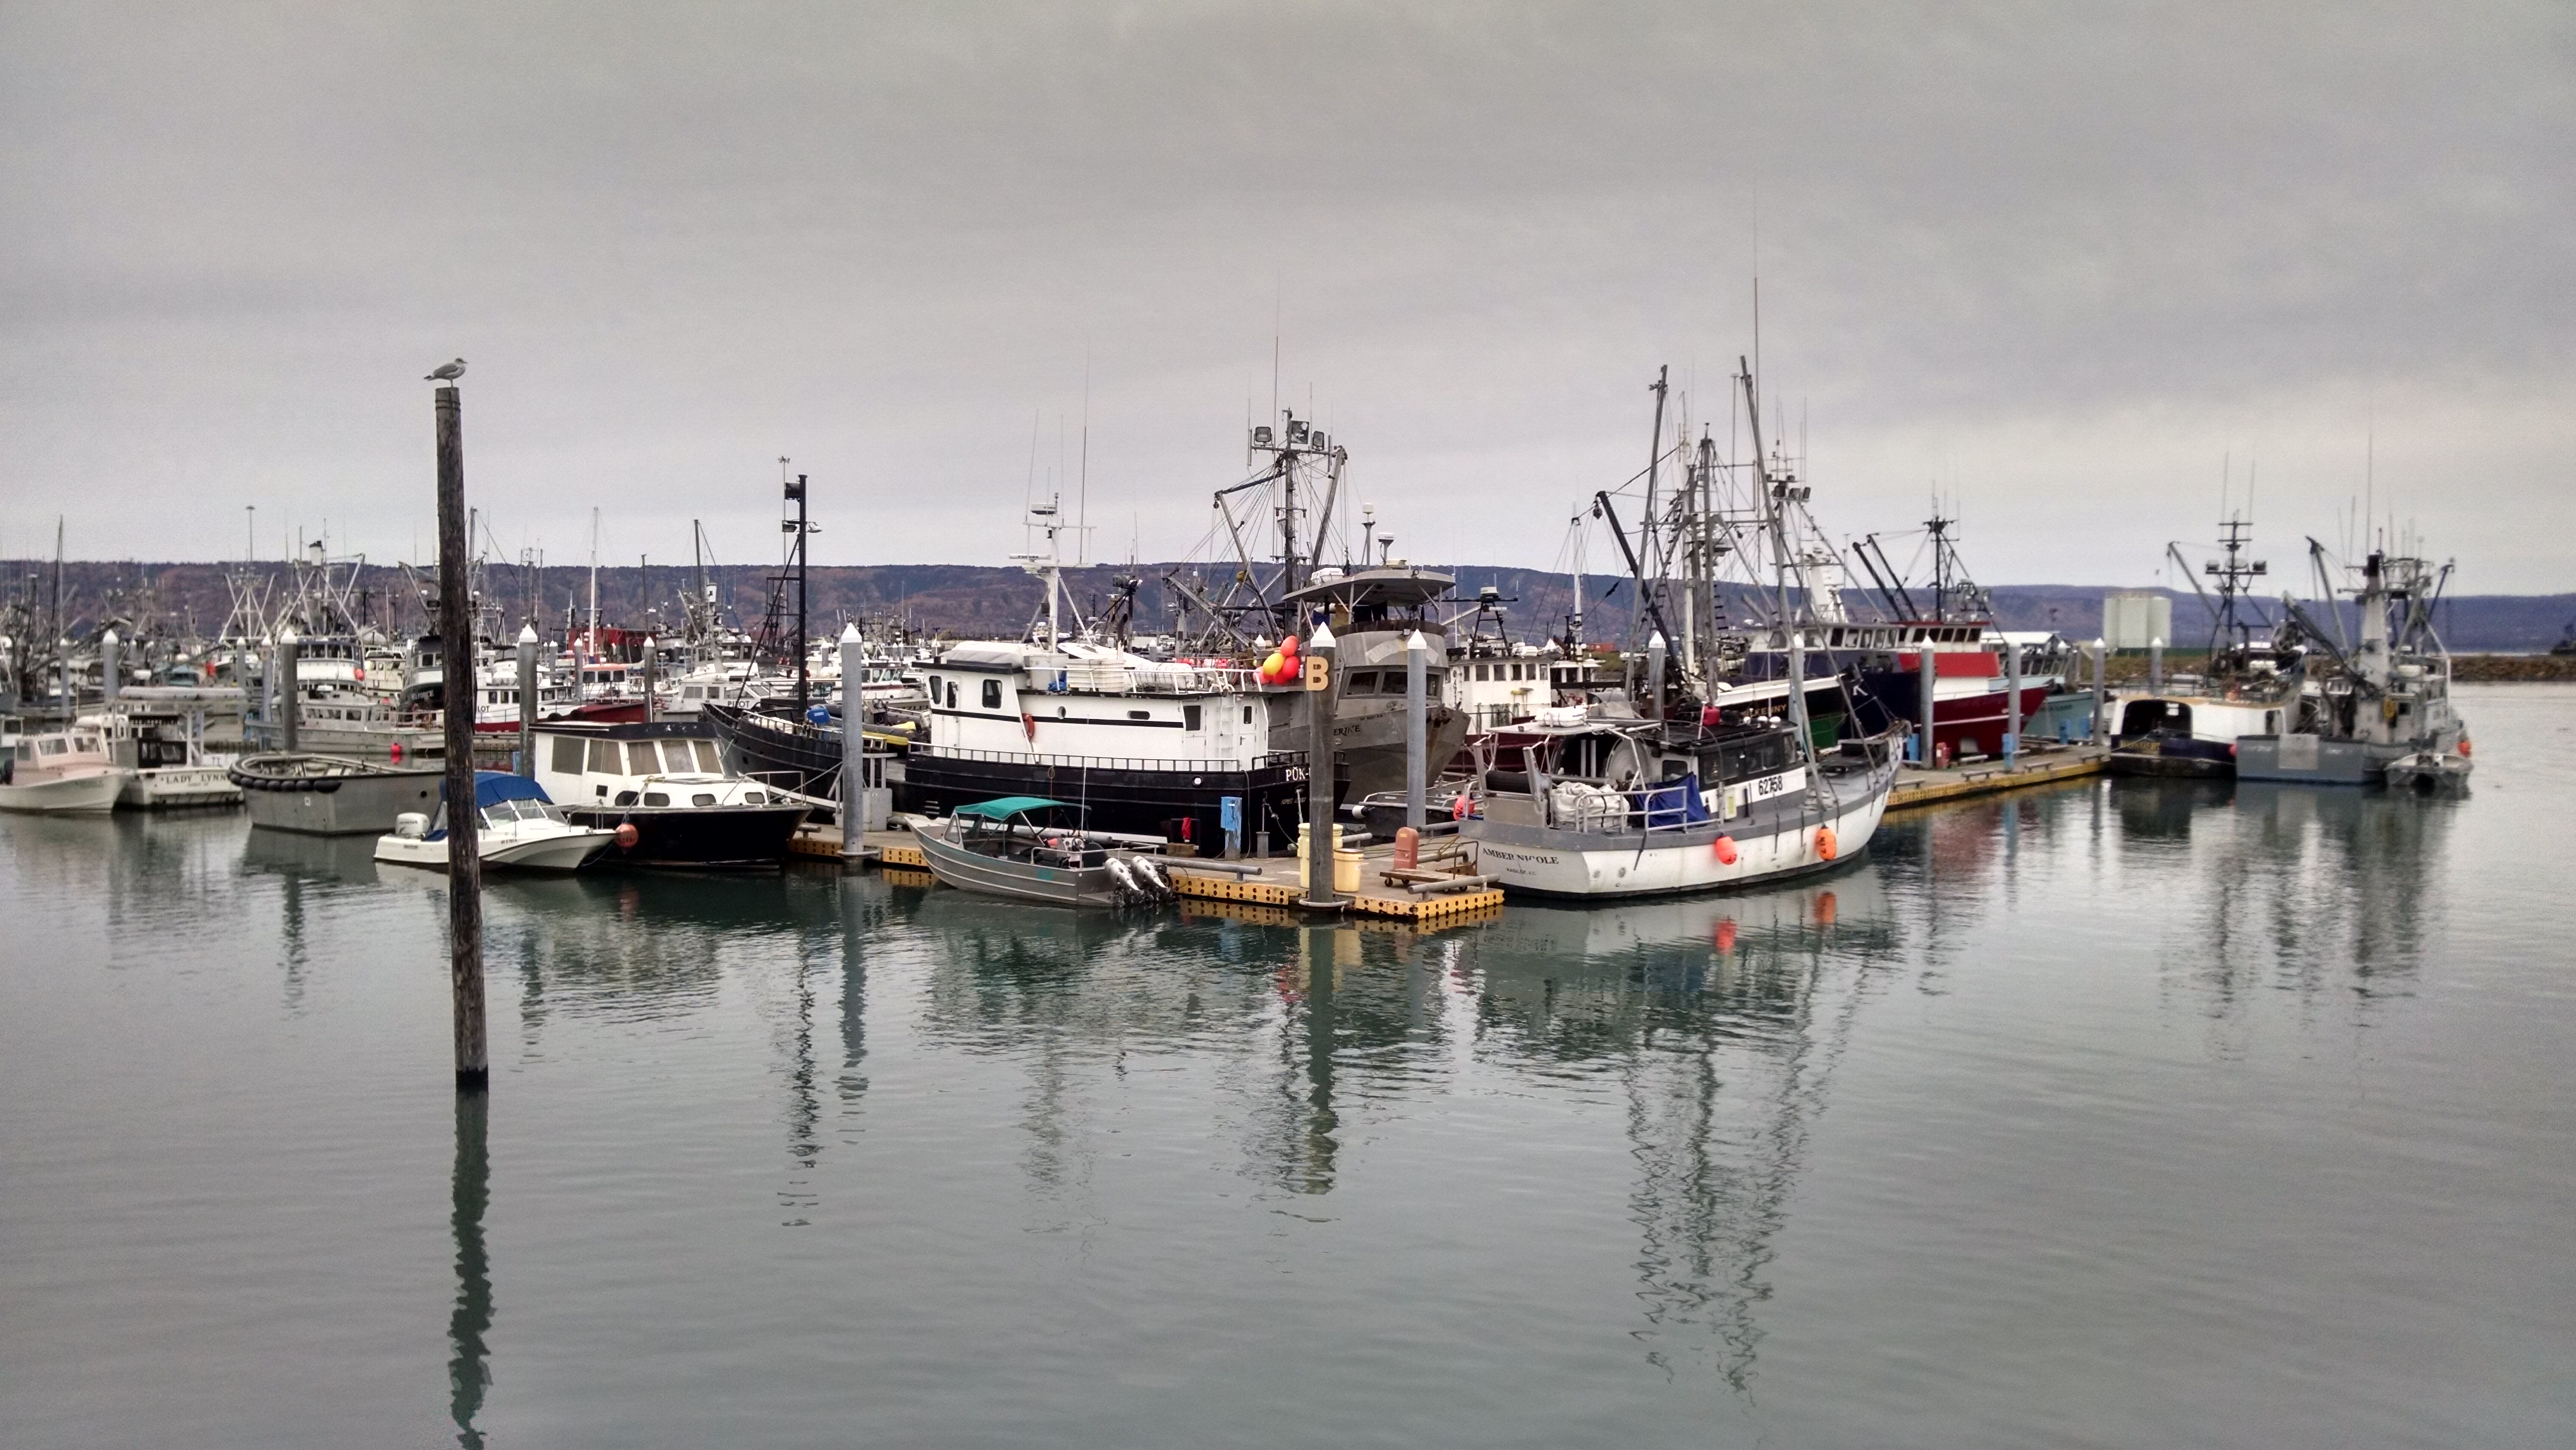 Alaska fishing boats in harbor